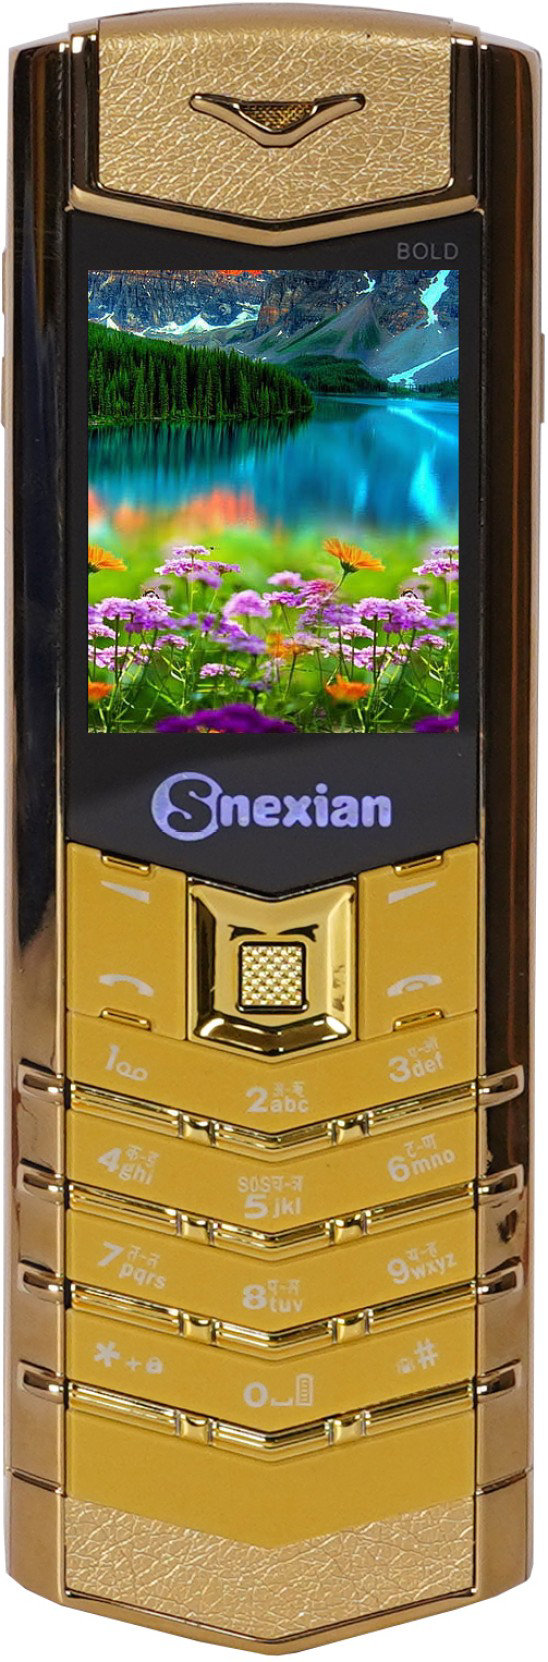 Snexian vertu button vartu dual sim phone - Black